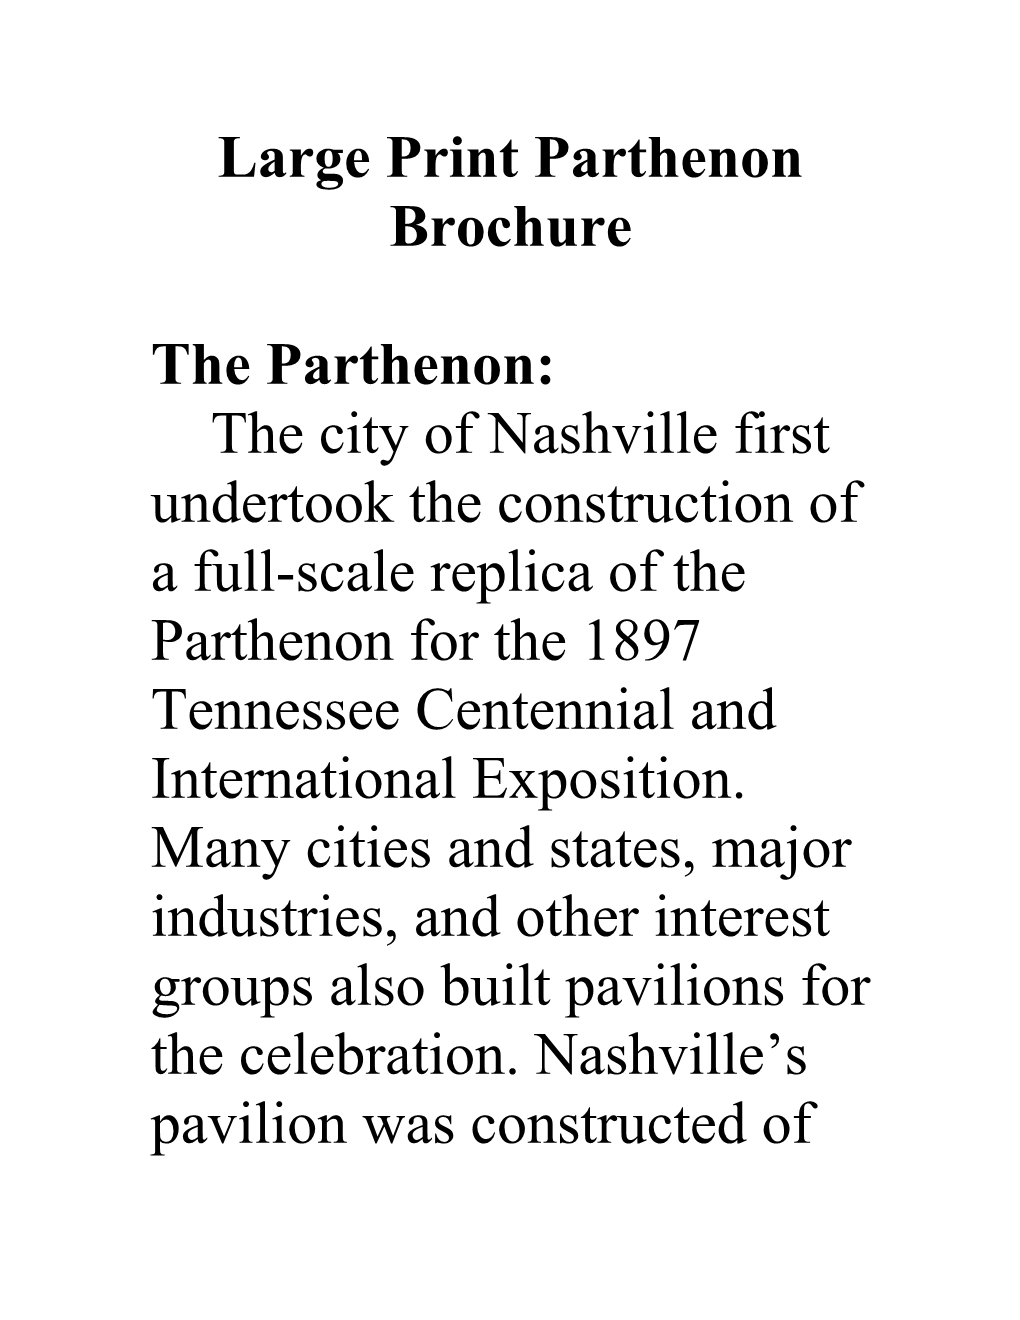 Large Print Parthenon Brochure